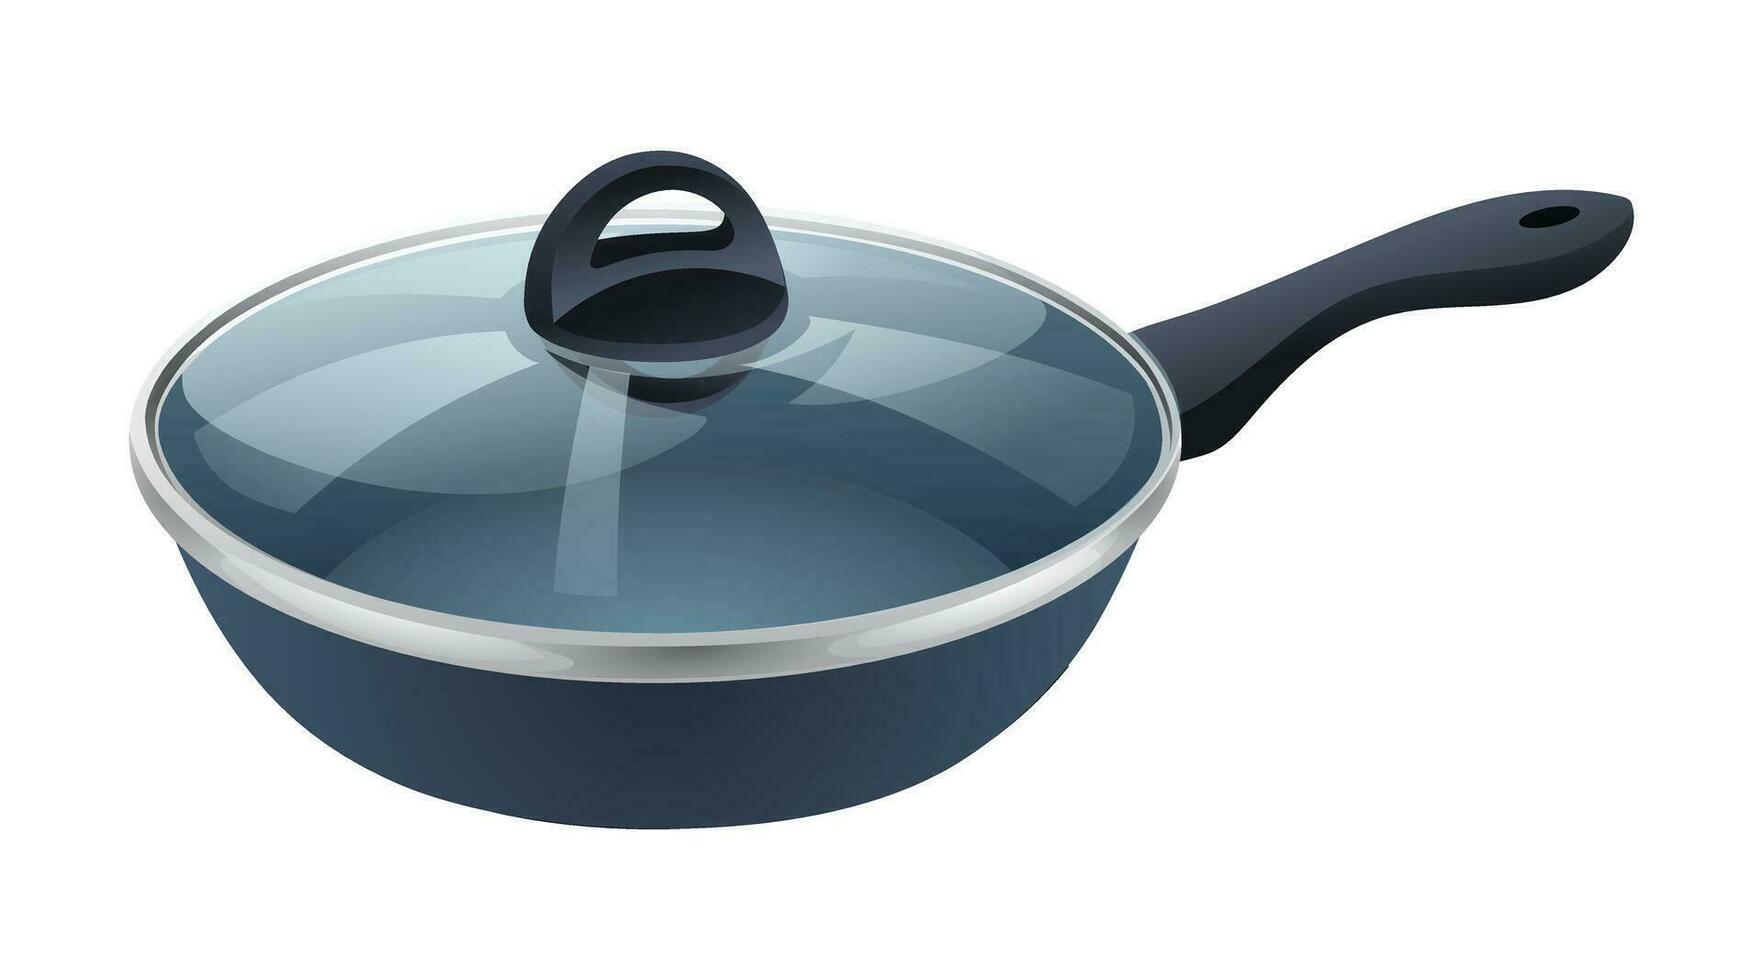 Frying pan vector isolated on white background. Kitchen utensil cartoon illustration